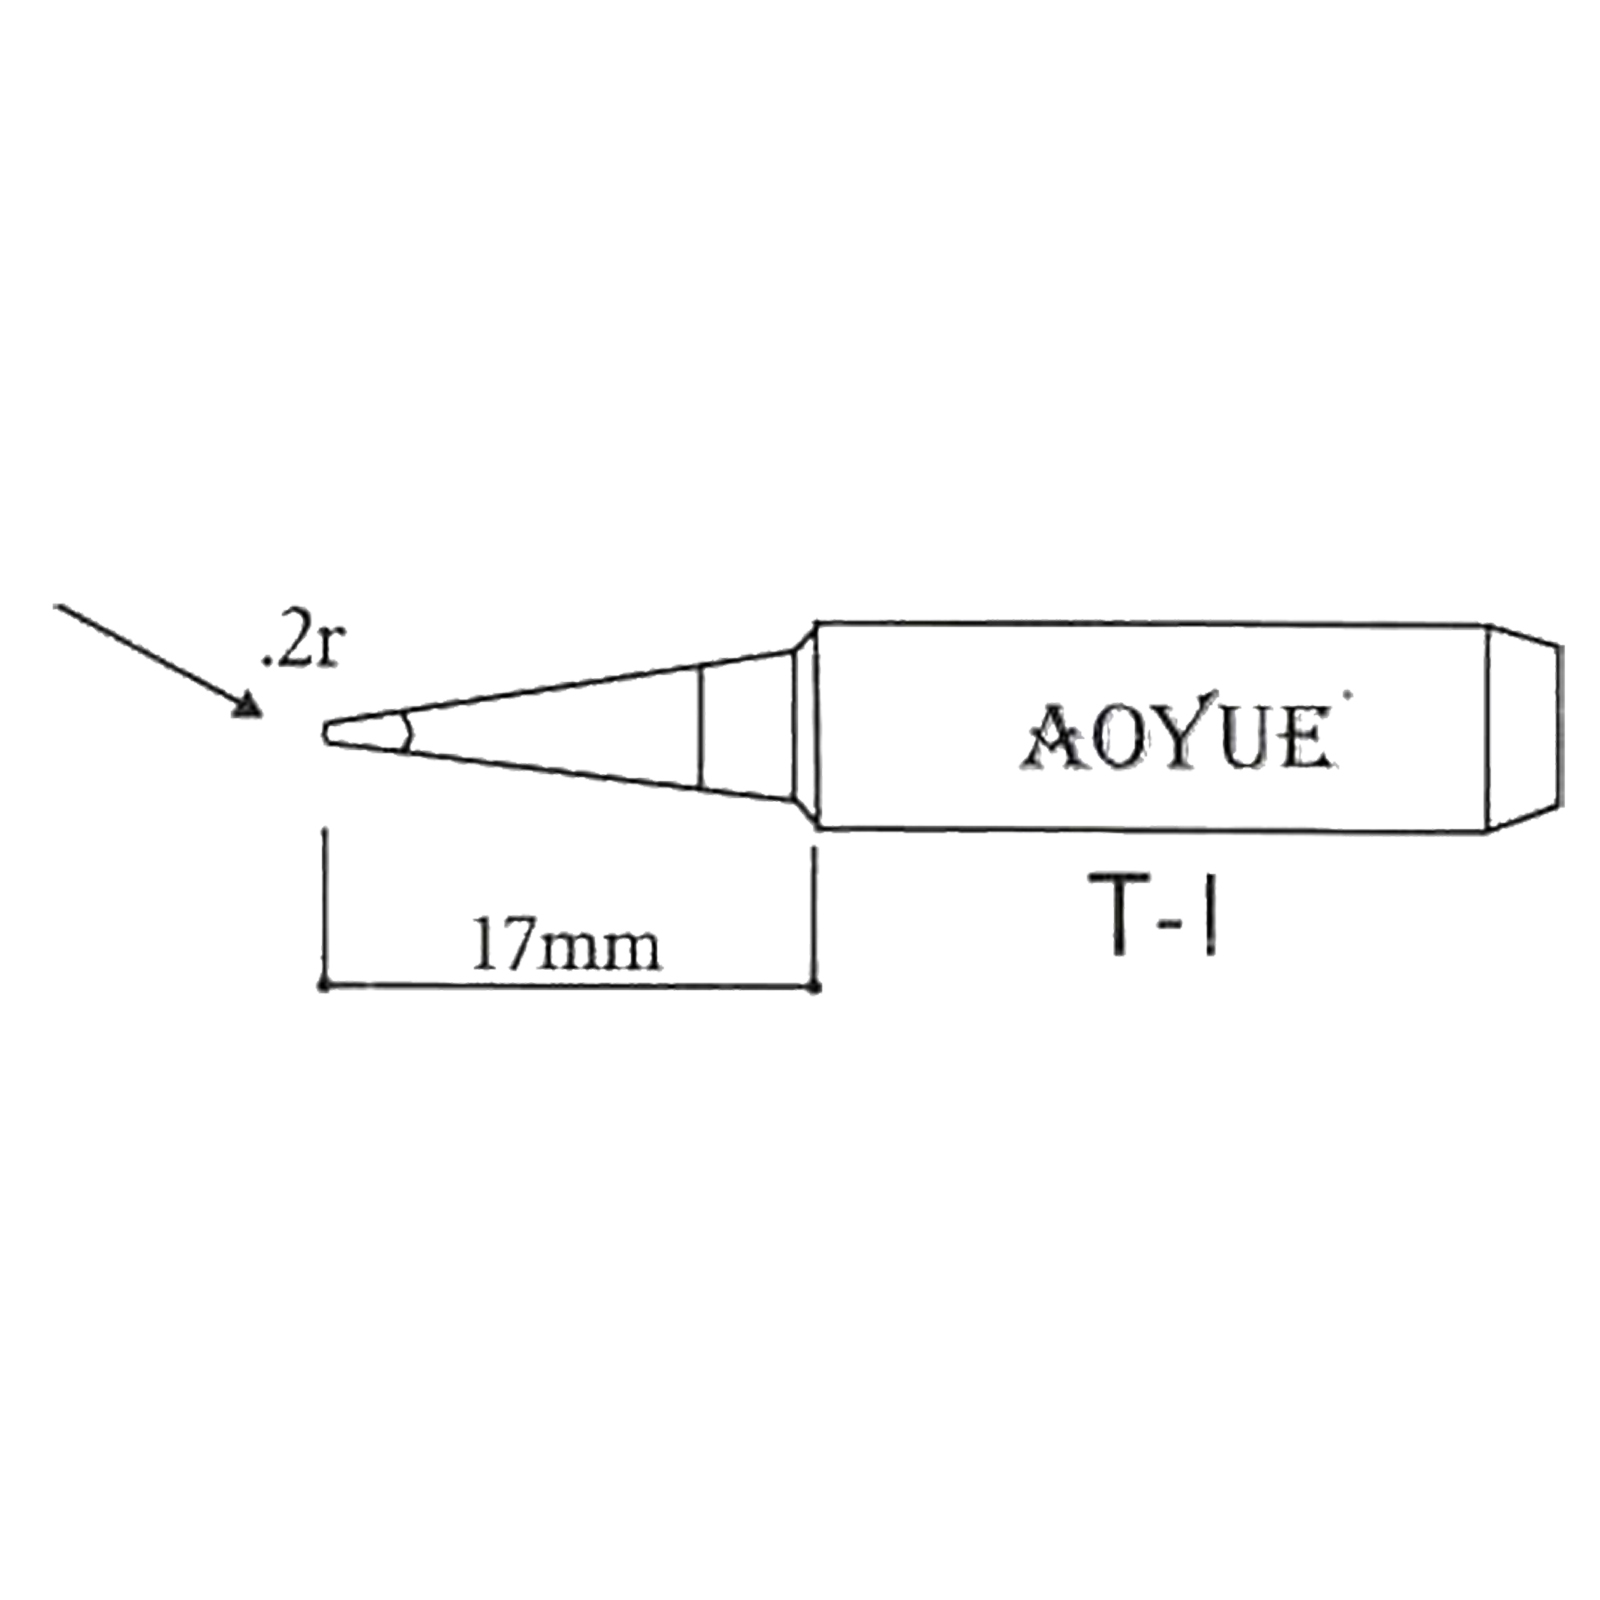 AOYUE T-I Lötspitze für Lötkolben R 0.2mm